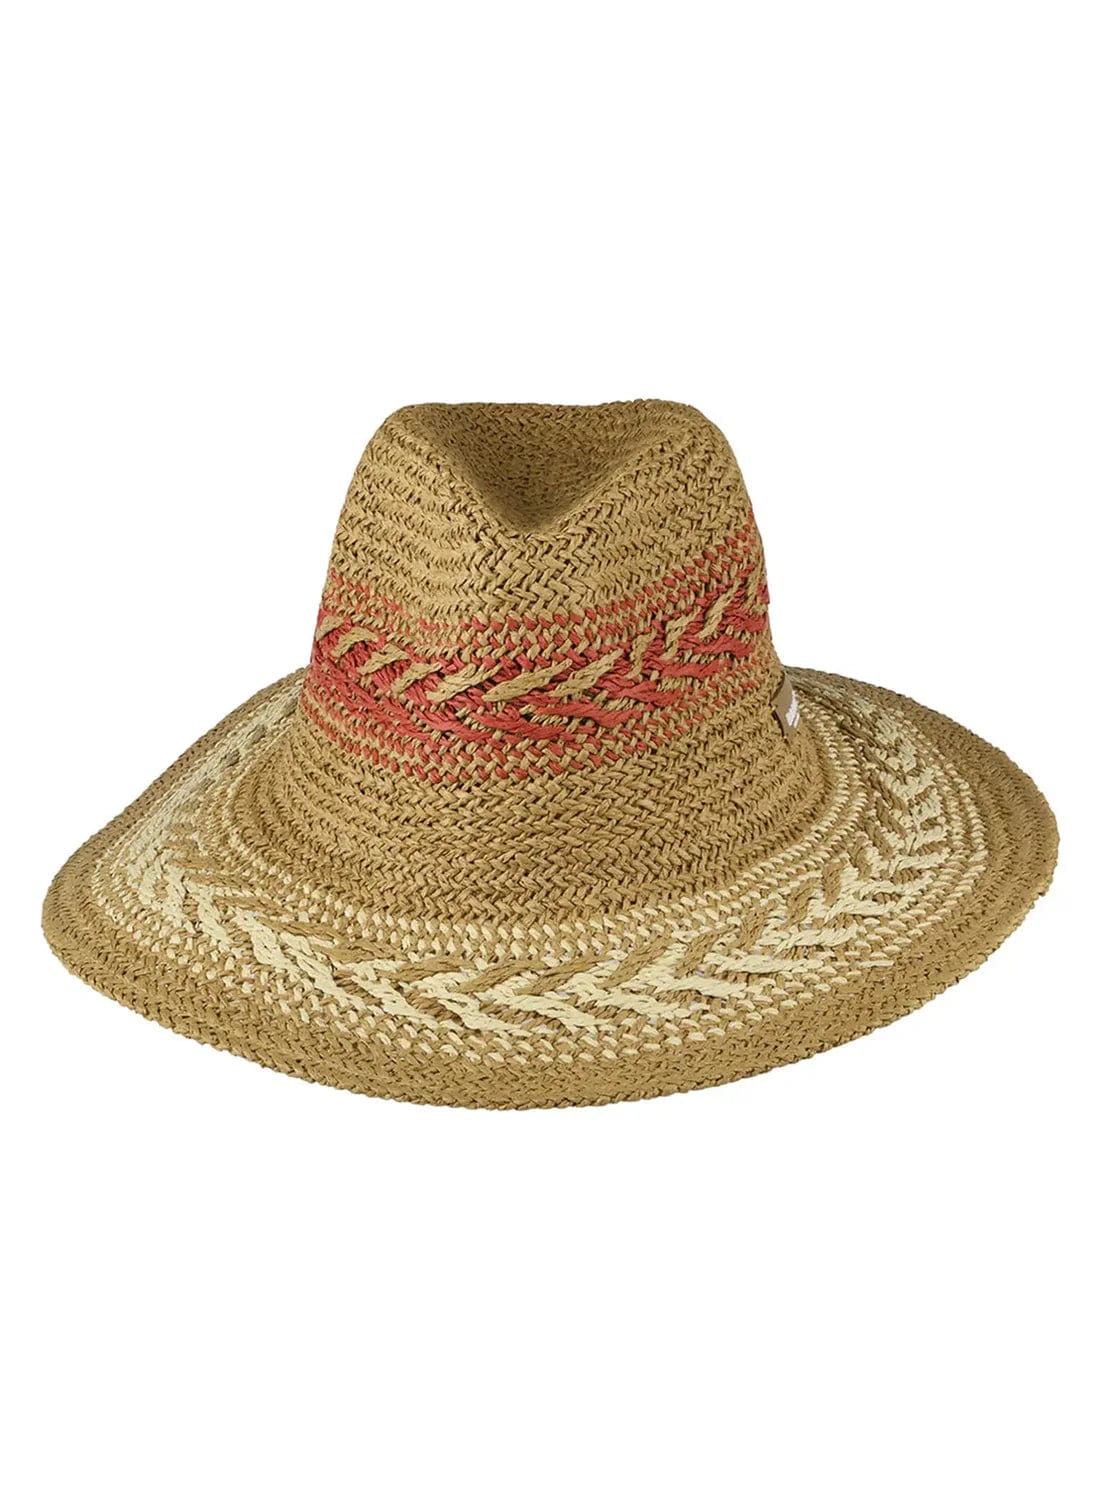 Barts Caledona Hat in Morganite